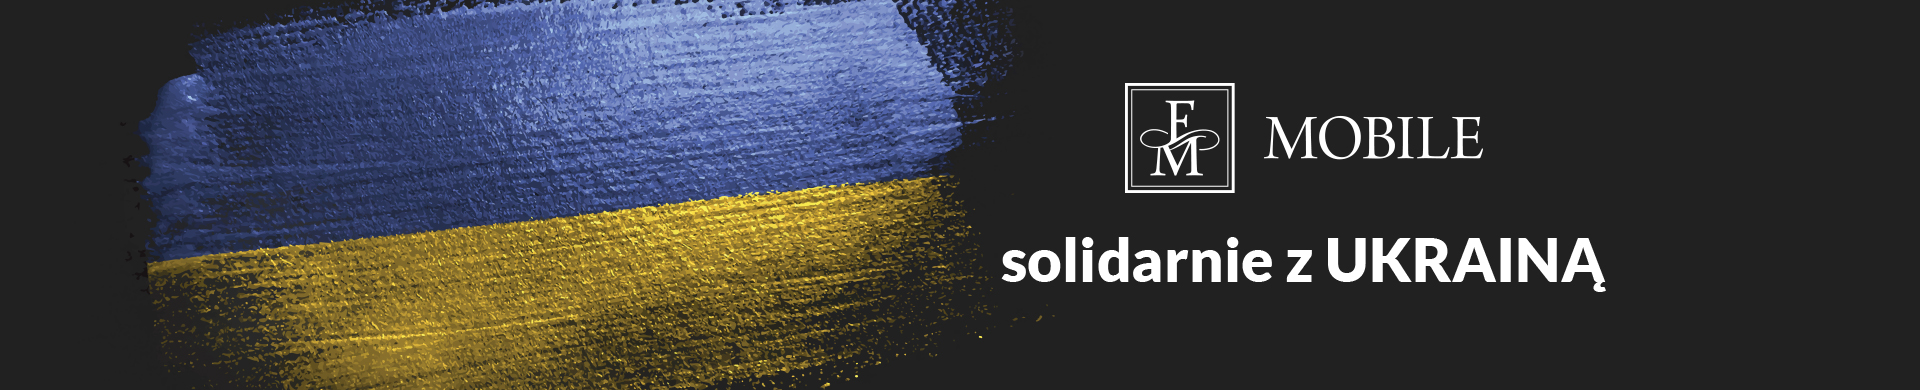 FM MOBILE solidarnie z Ukrainą